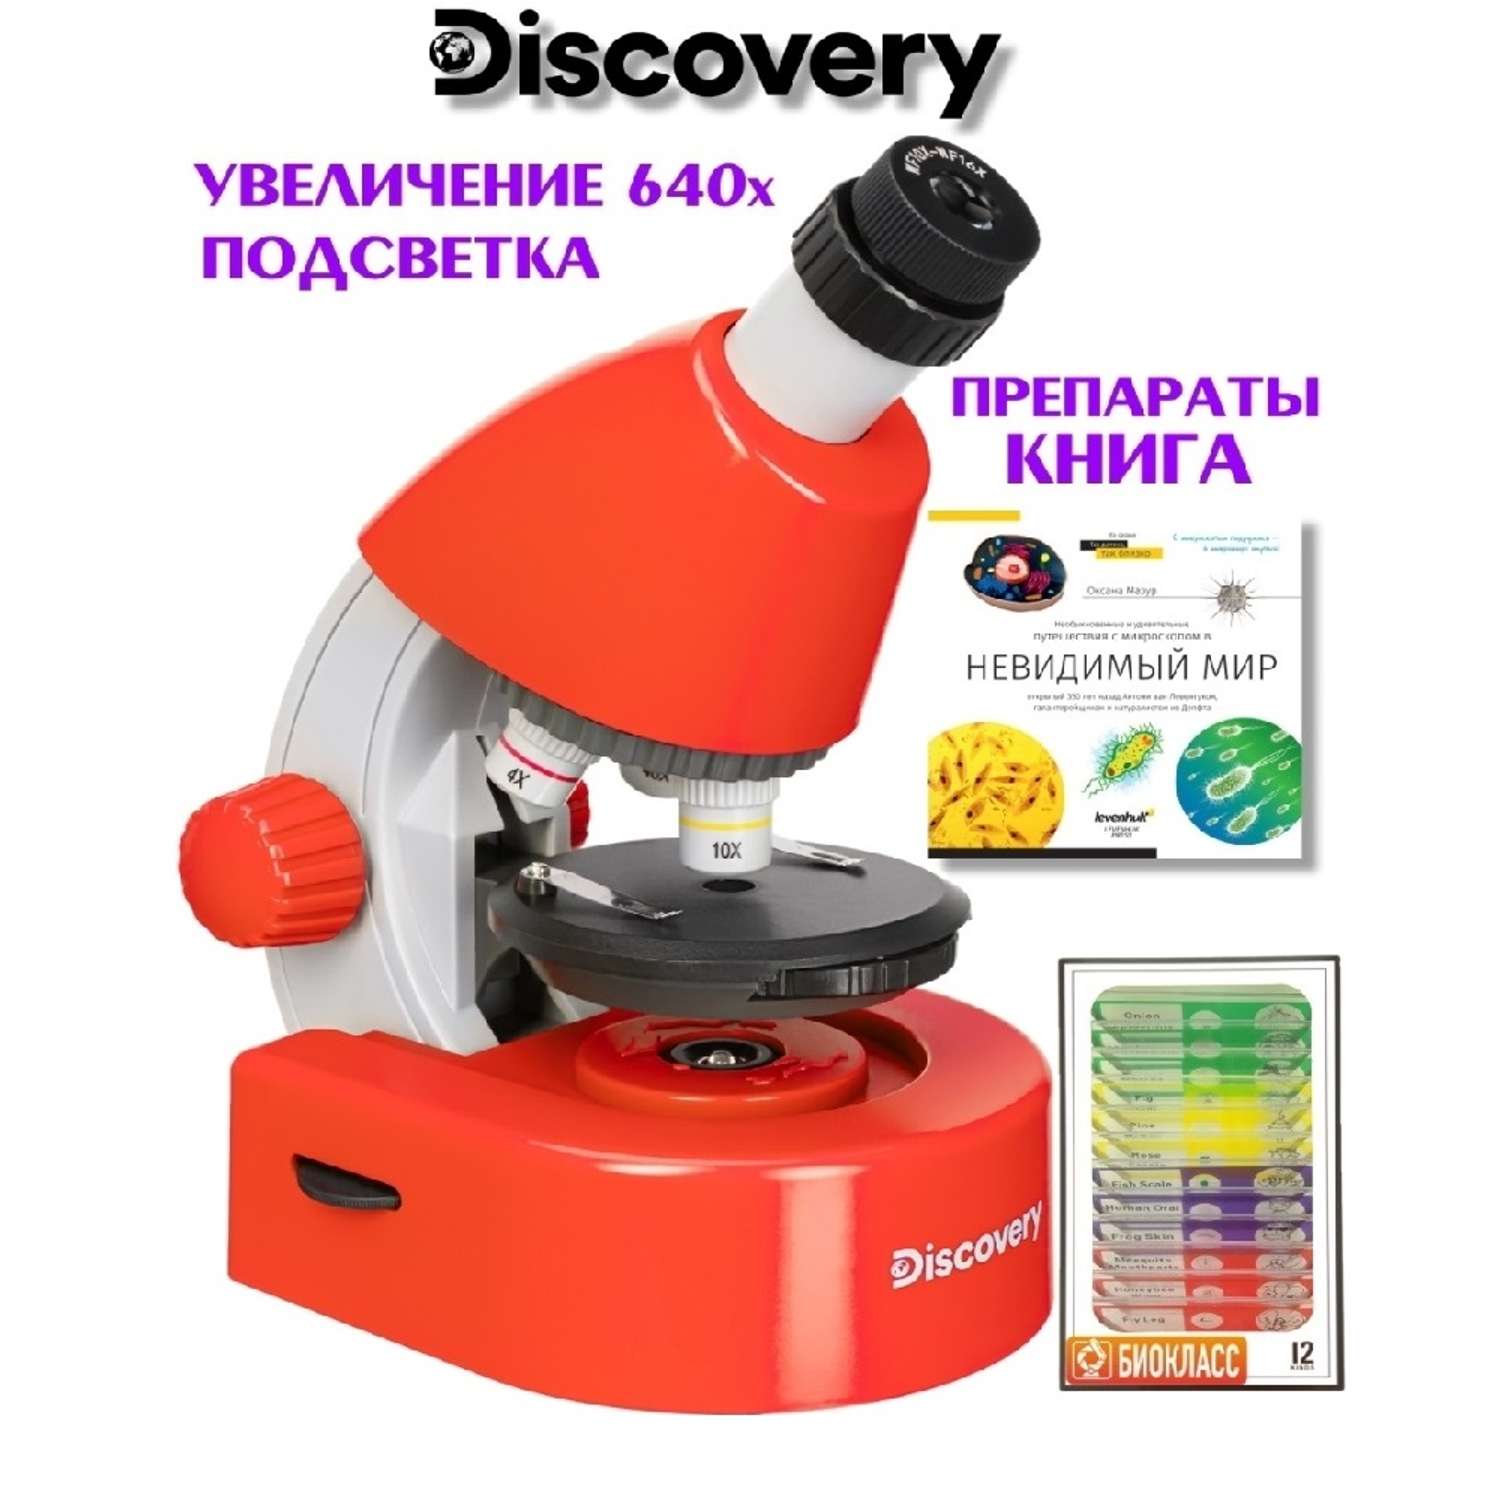 Микроскоп DISCOVERY Micro с книгой и препаратами 12 образцов - фото 2